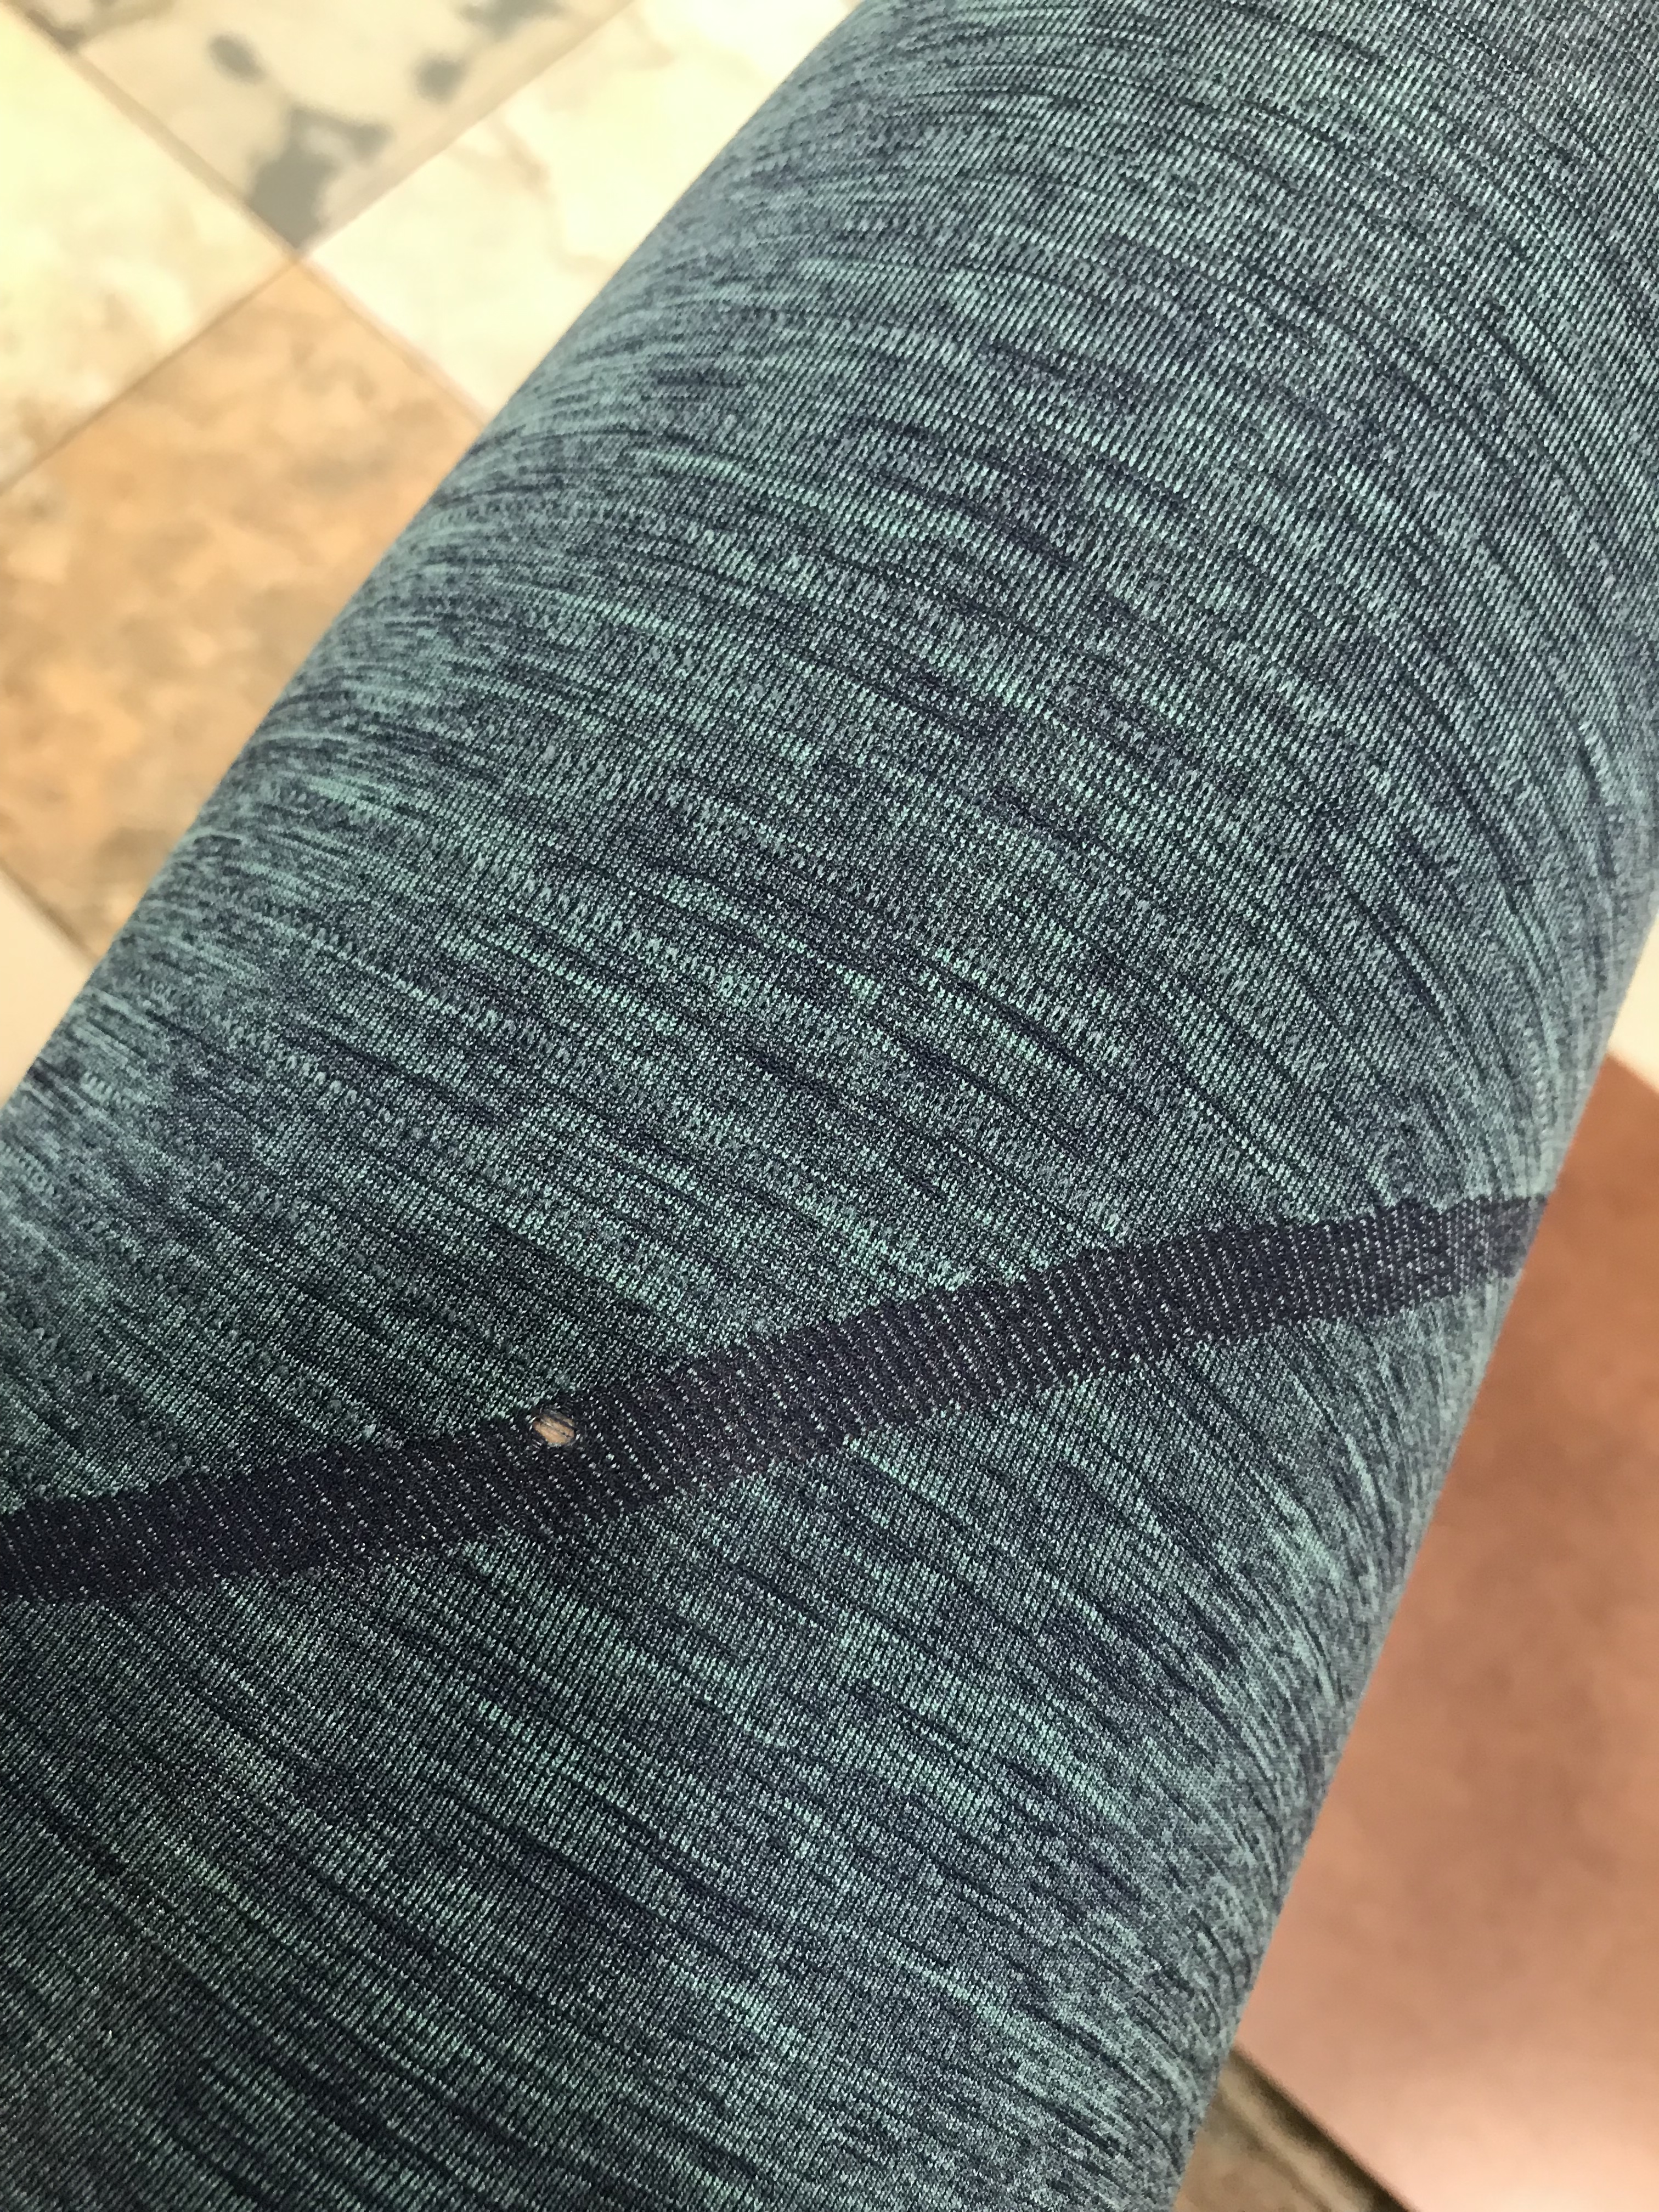 Honest Alphalete Revival Legging Review – A hole 3 months in